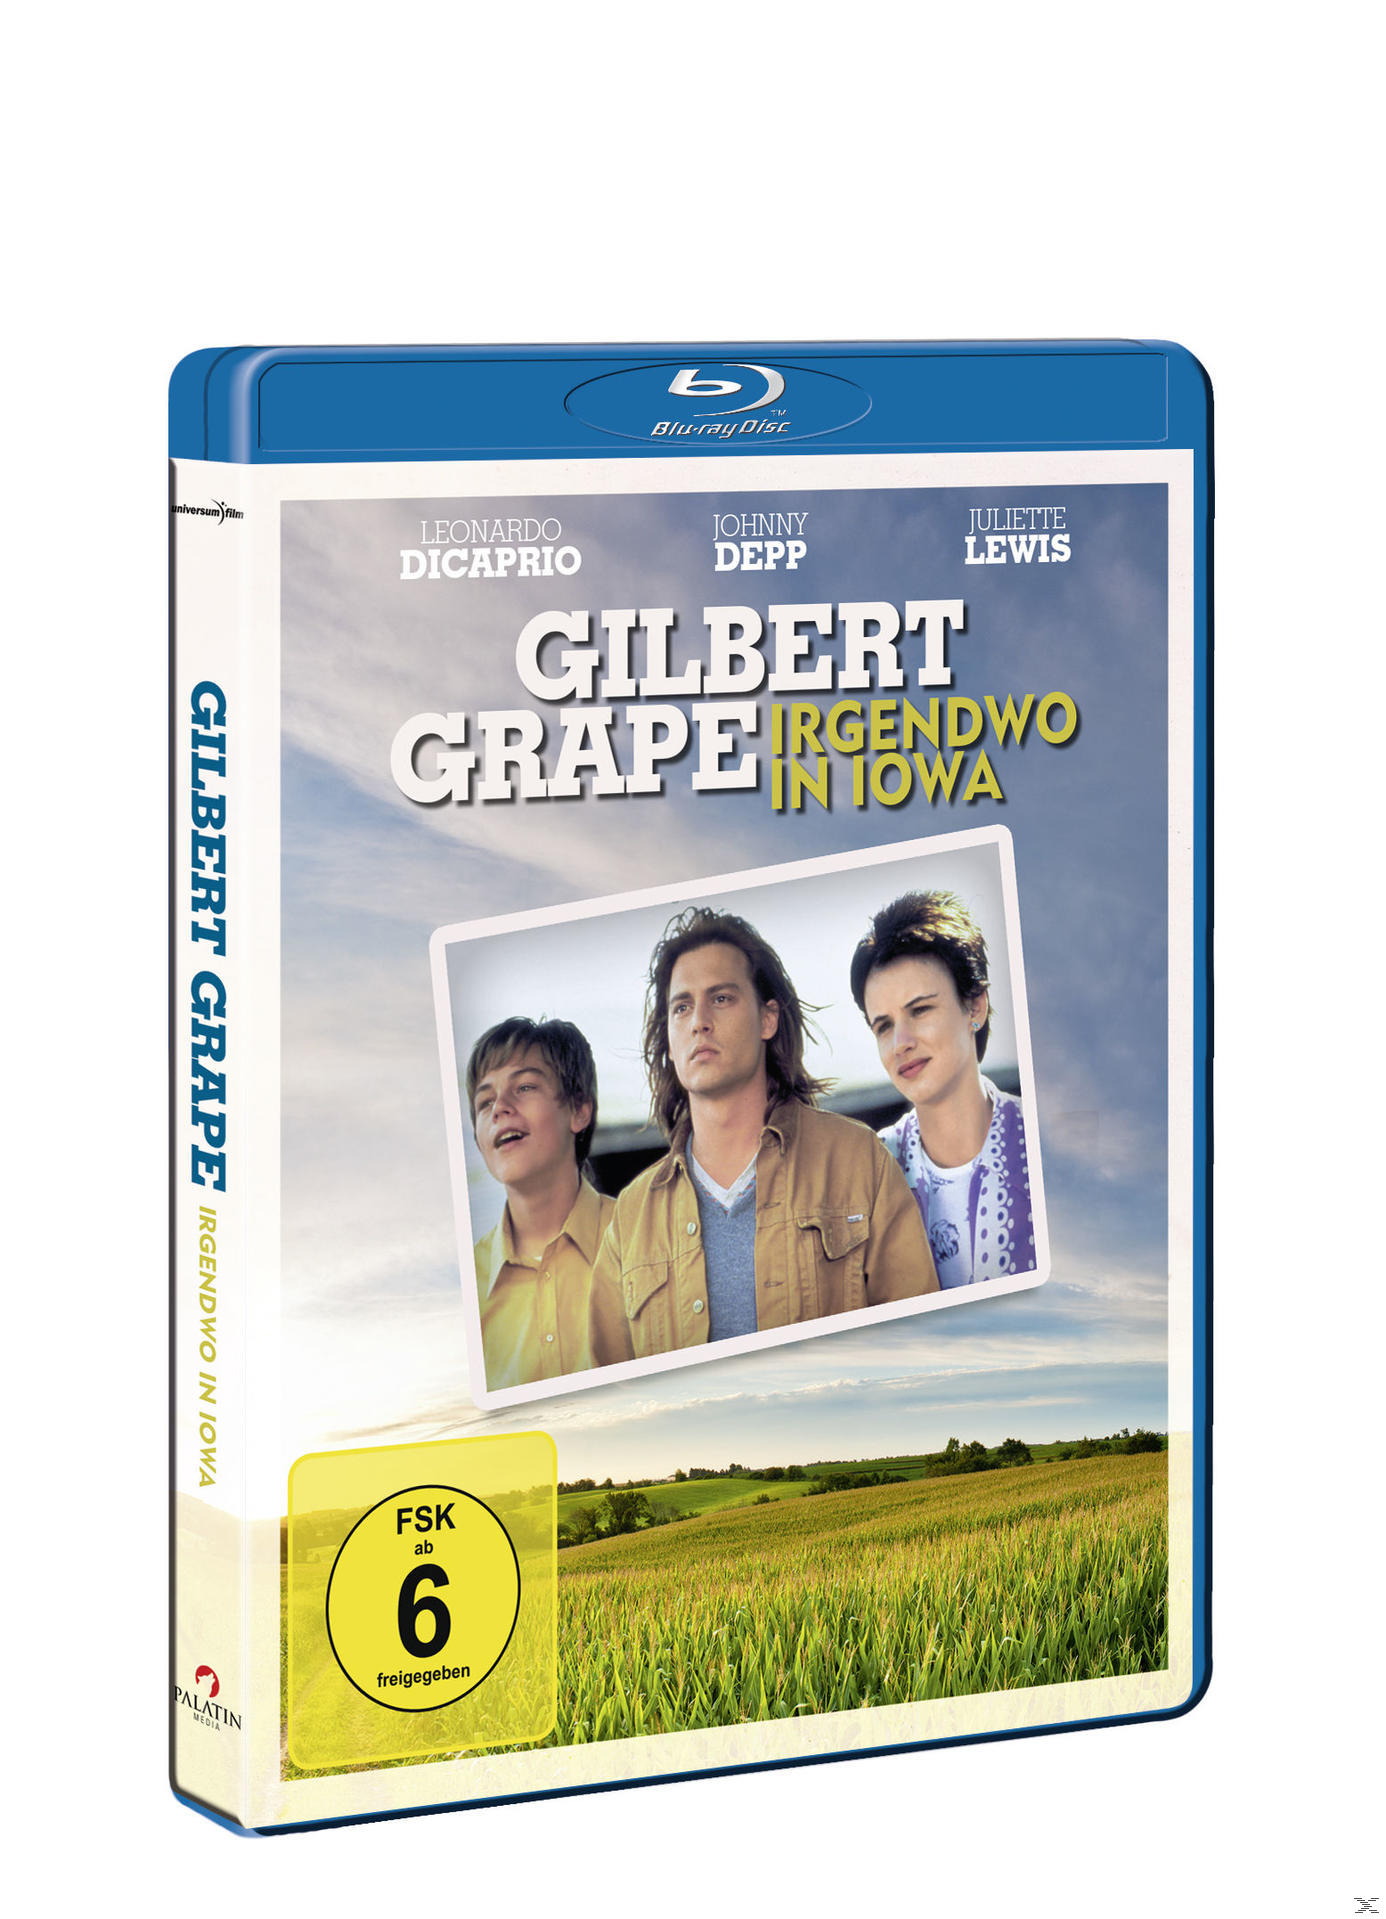 Iowa Gilbert Grape in Blu-ray - Irgendwo